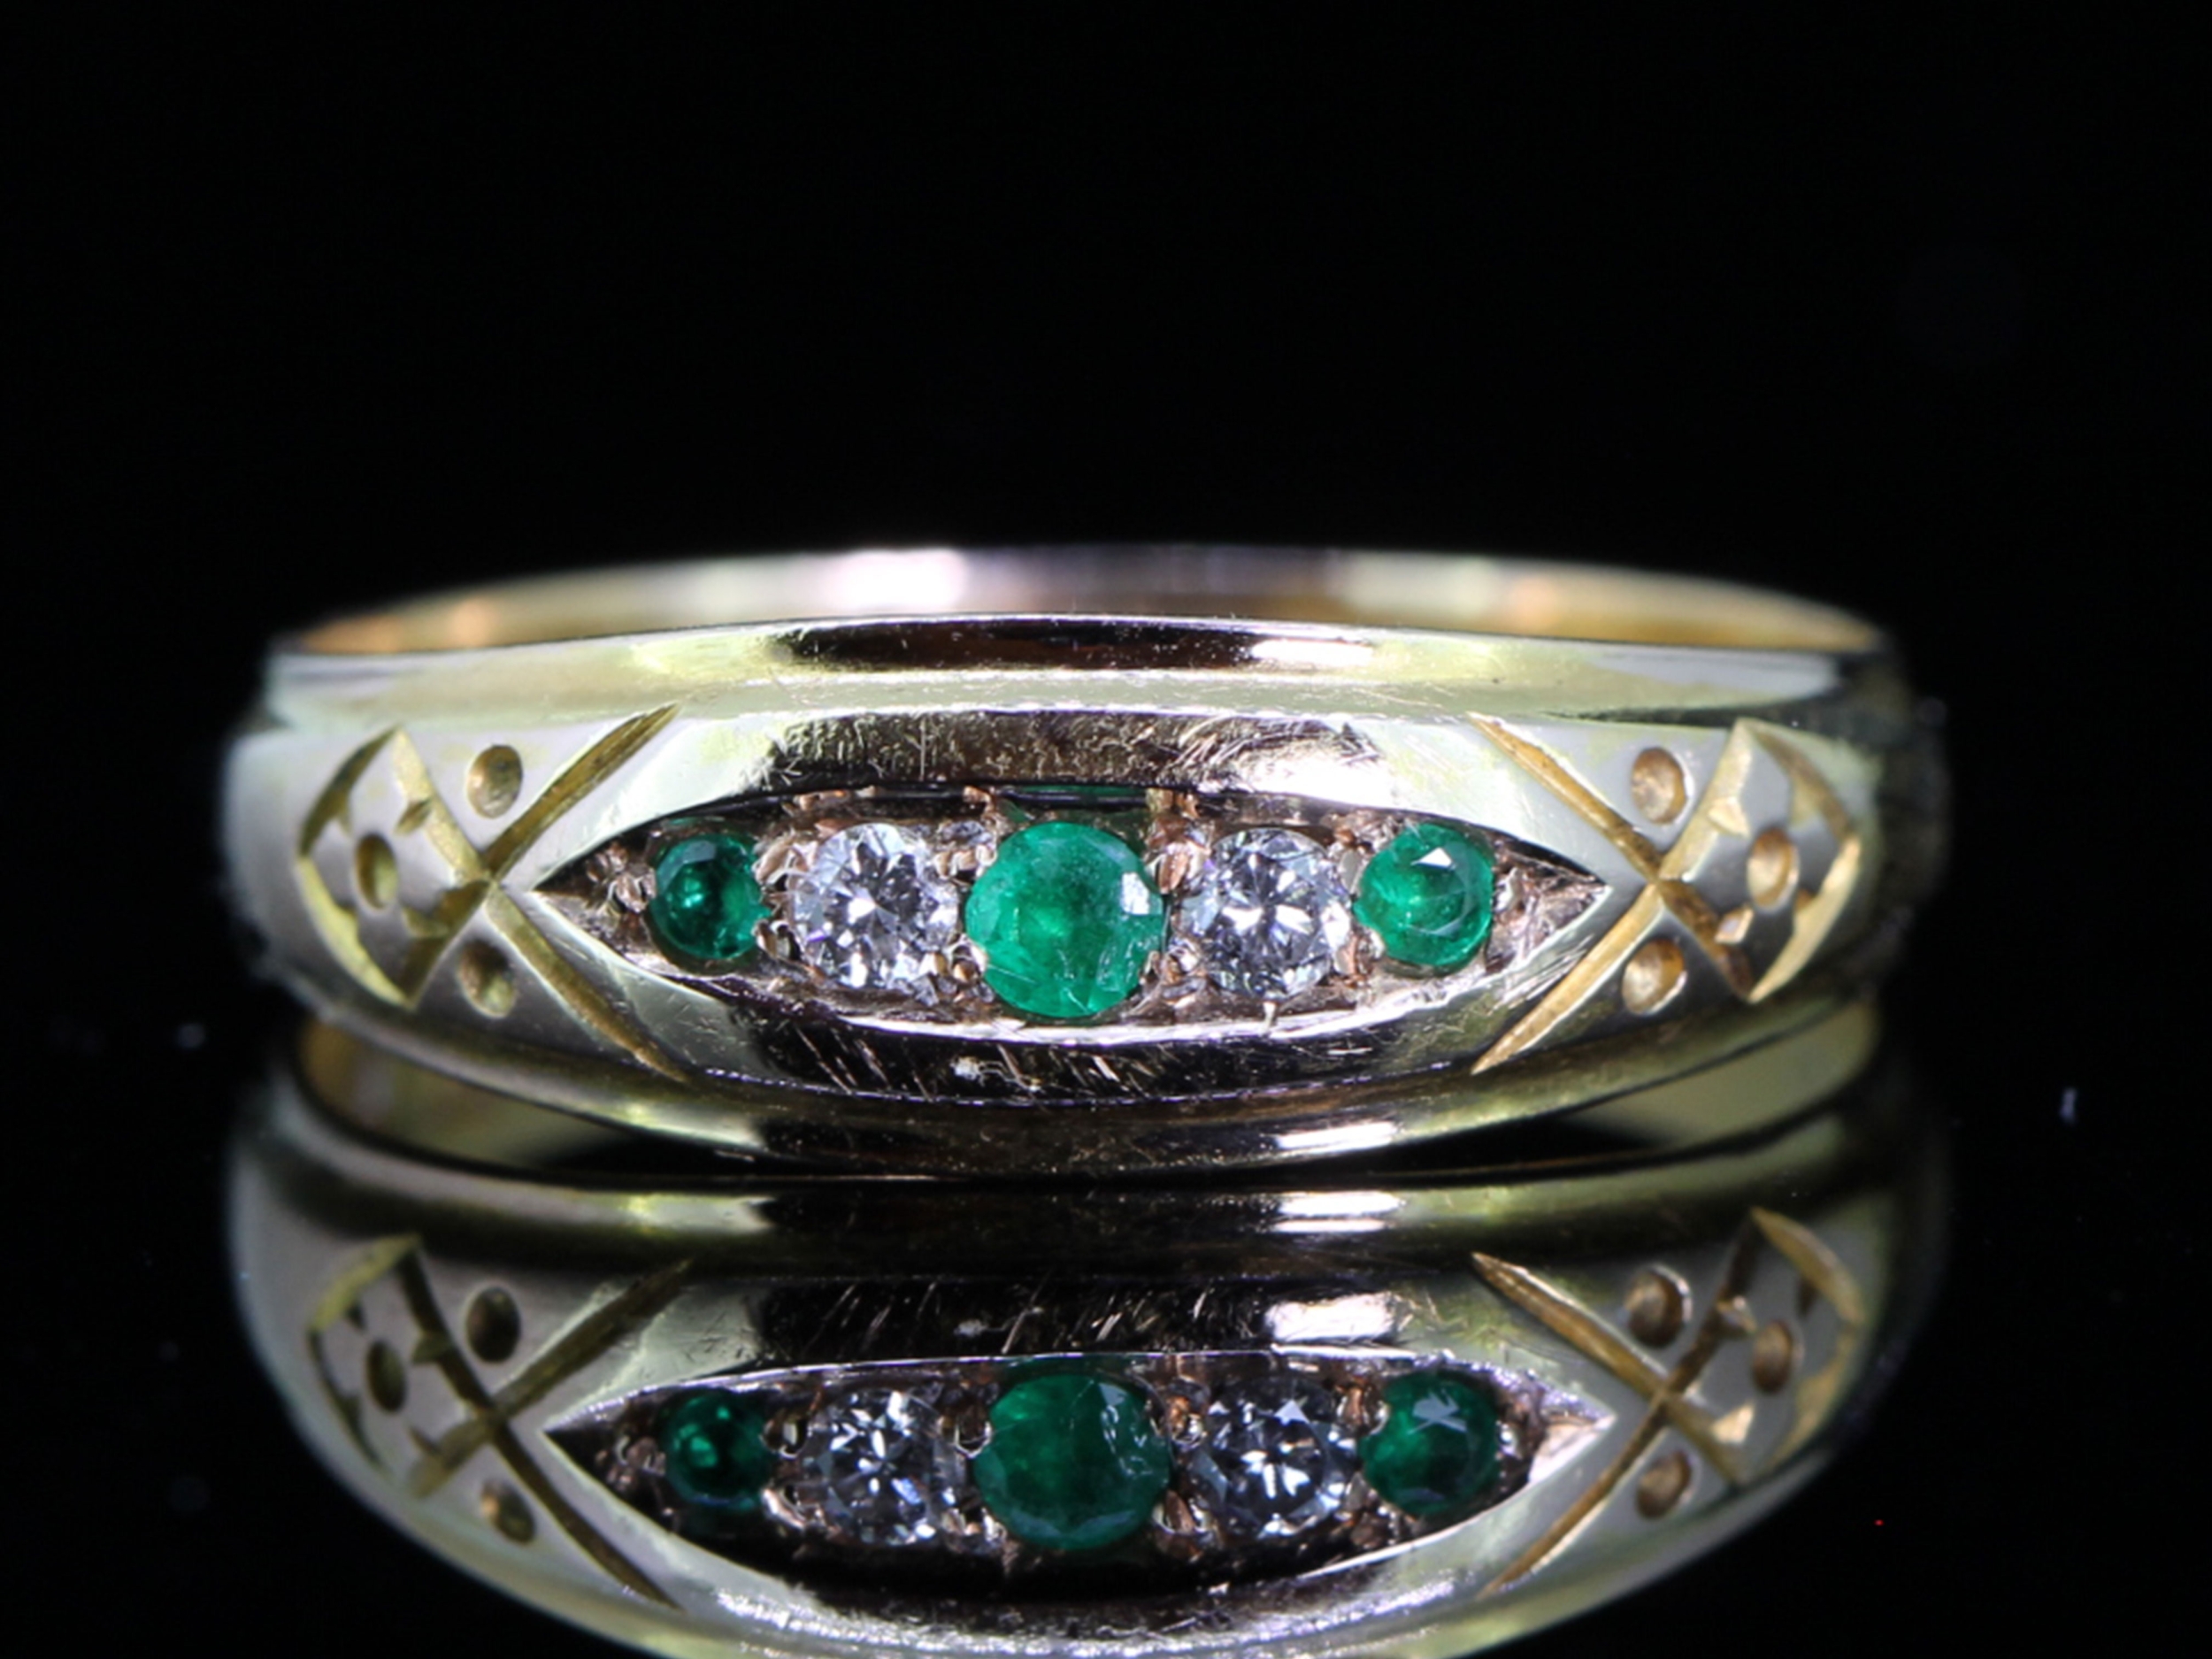  elegant edwardian emerald and diamond 15 carat gold ring - dates 1909